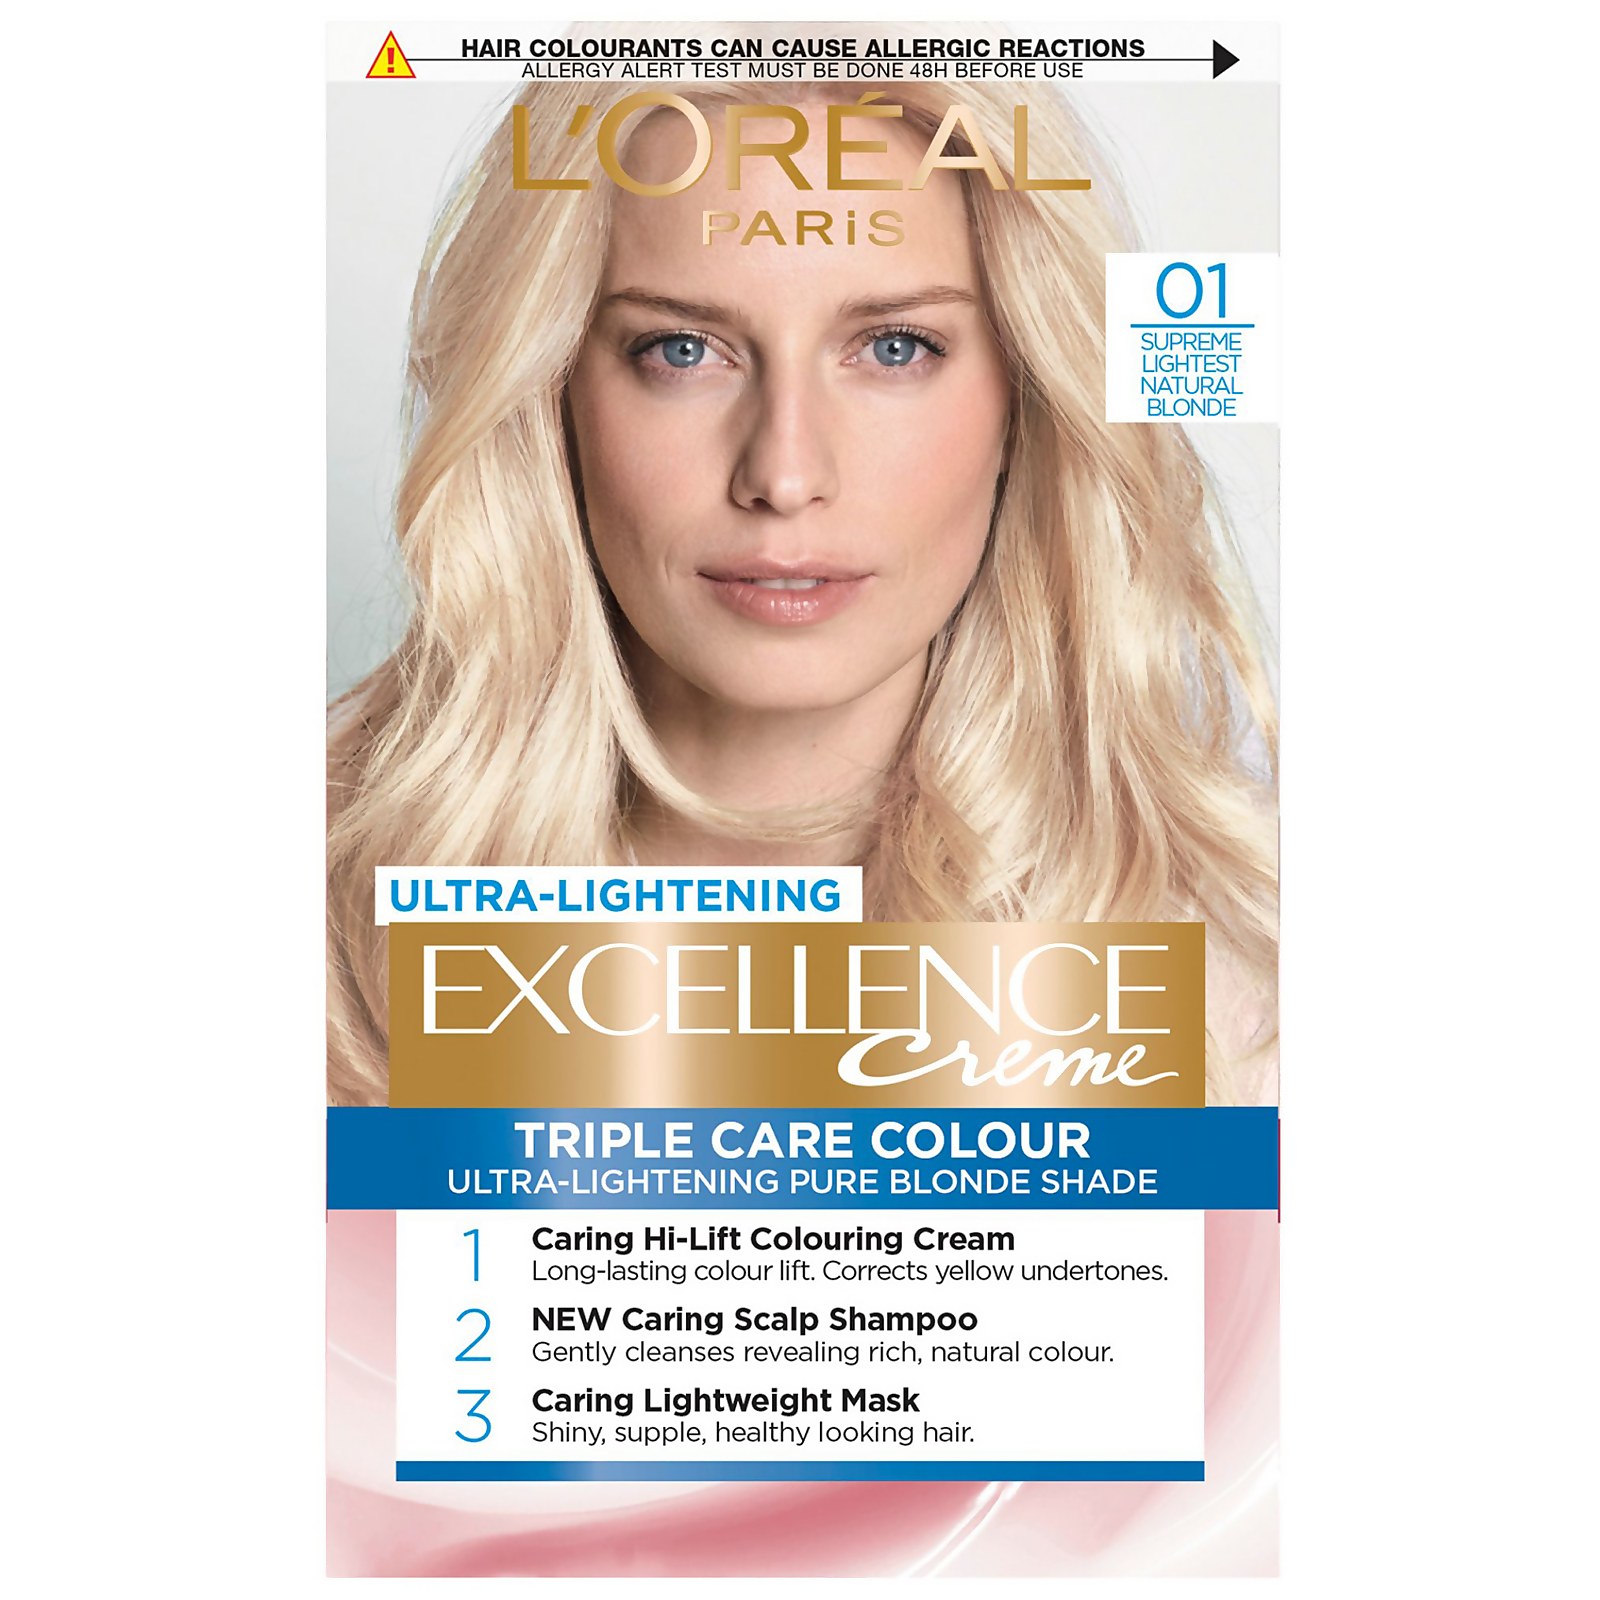 L'Oreal Paris Excellence Creme Permanent Hair Dye (Various Shades) - 01 Lightest Natural Blonde